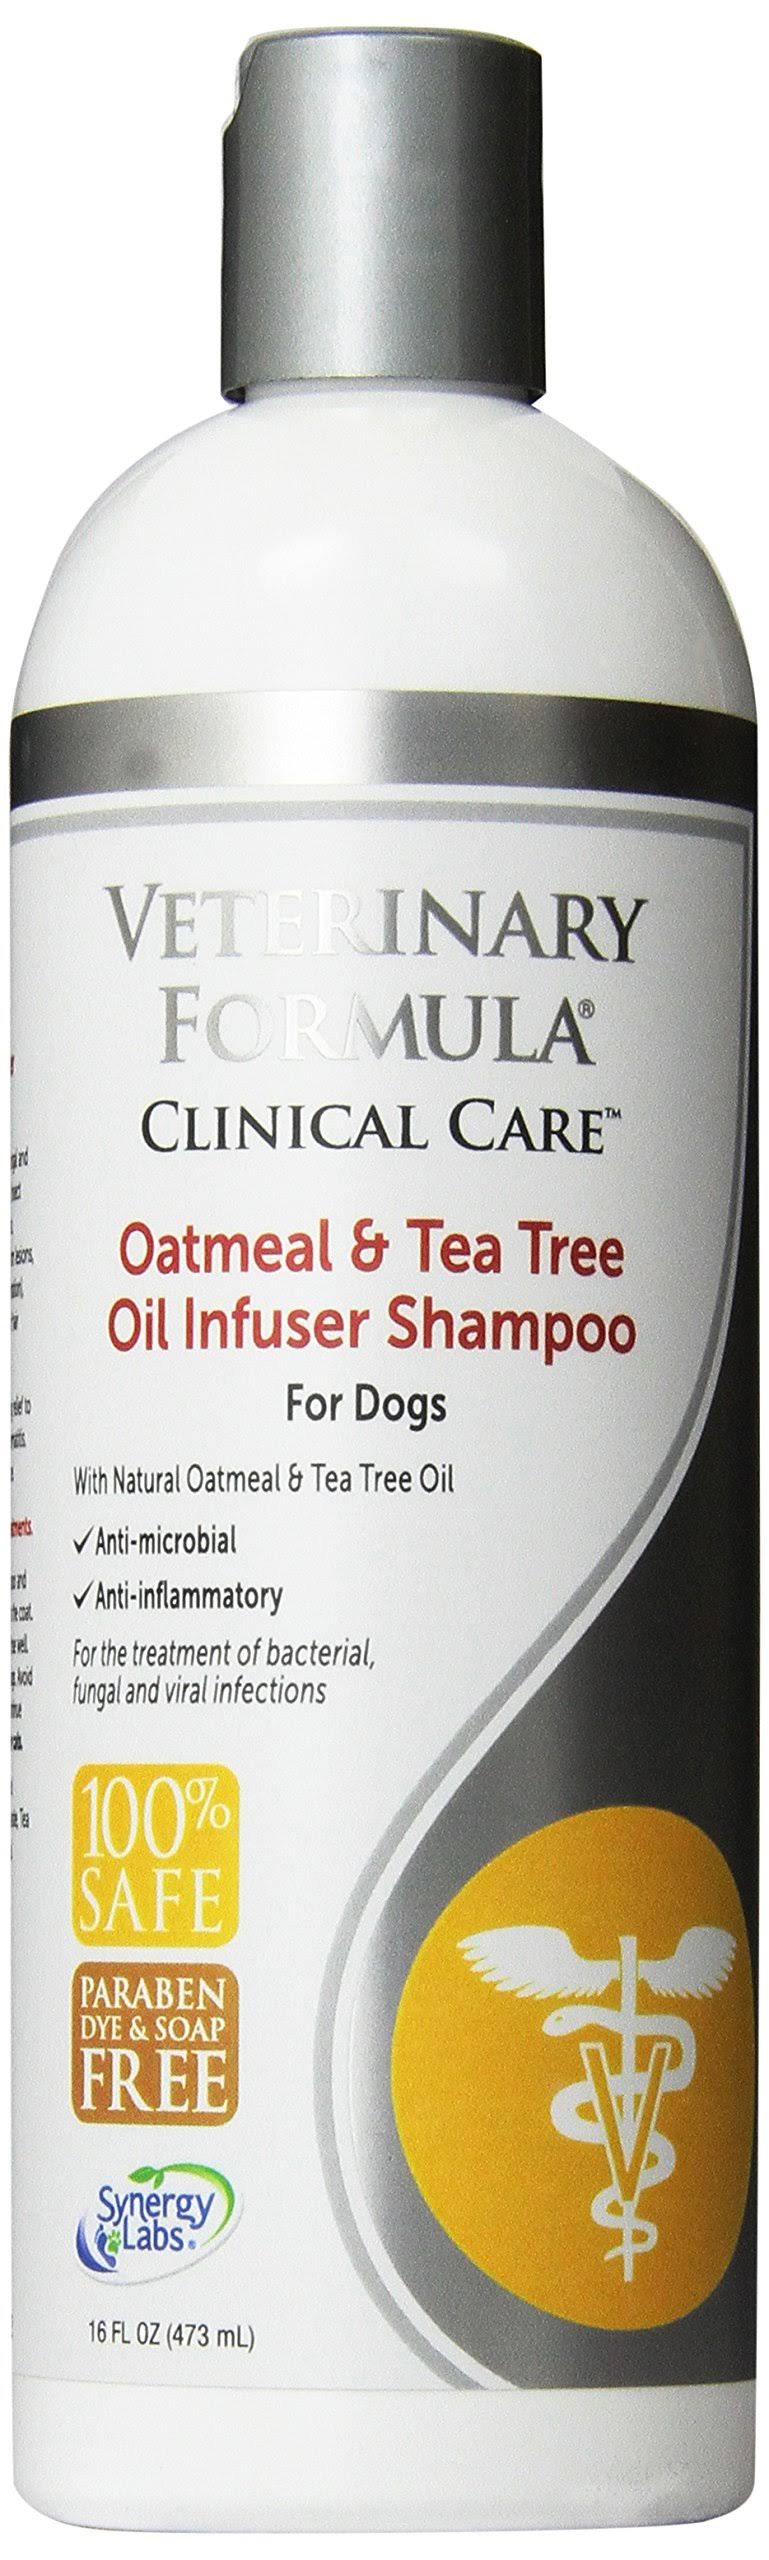 Veterinary Formula Clinical Care Oatmeal & Tea Tree Oil Infuser Shampoo - 473ml